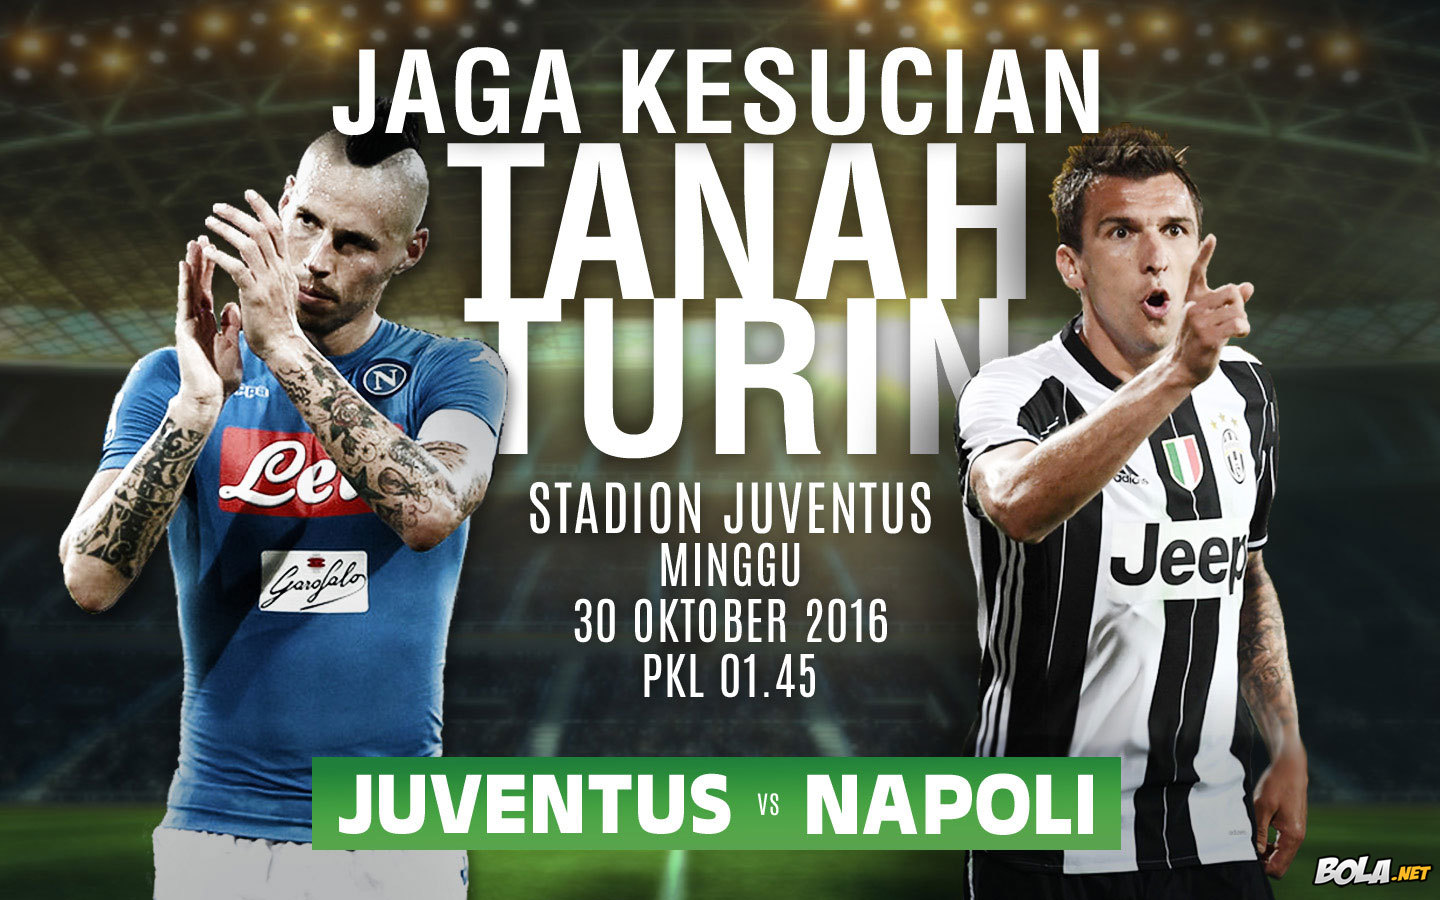 Deskripsi : Wallpaper Juventus Vs Napoli, size: 1440x900